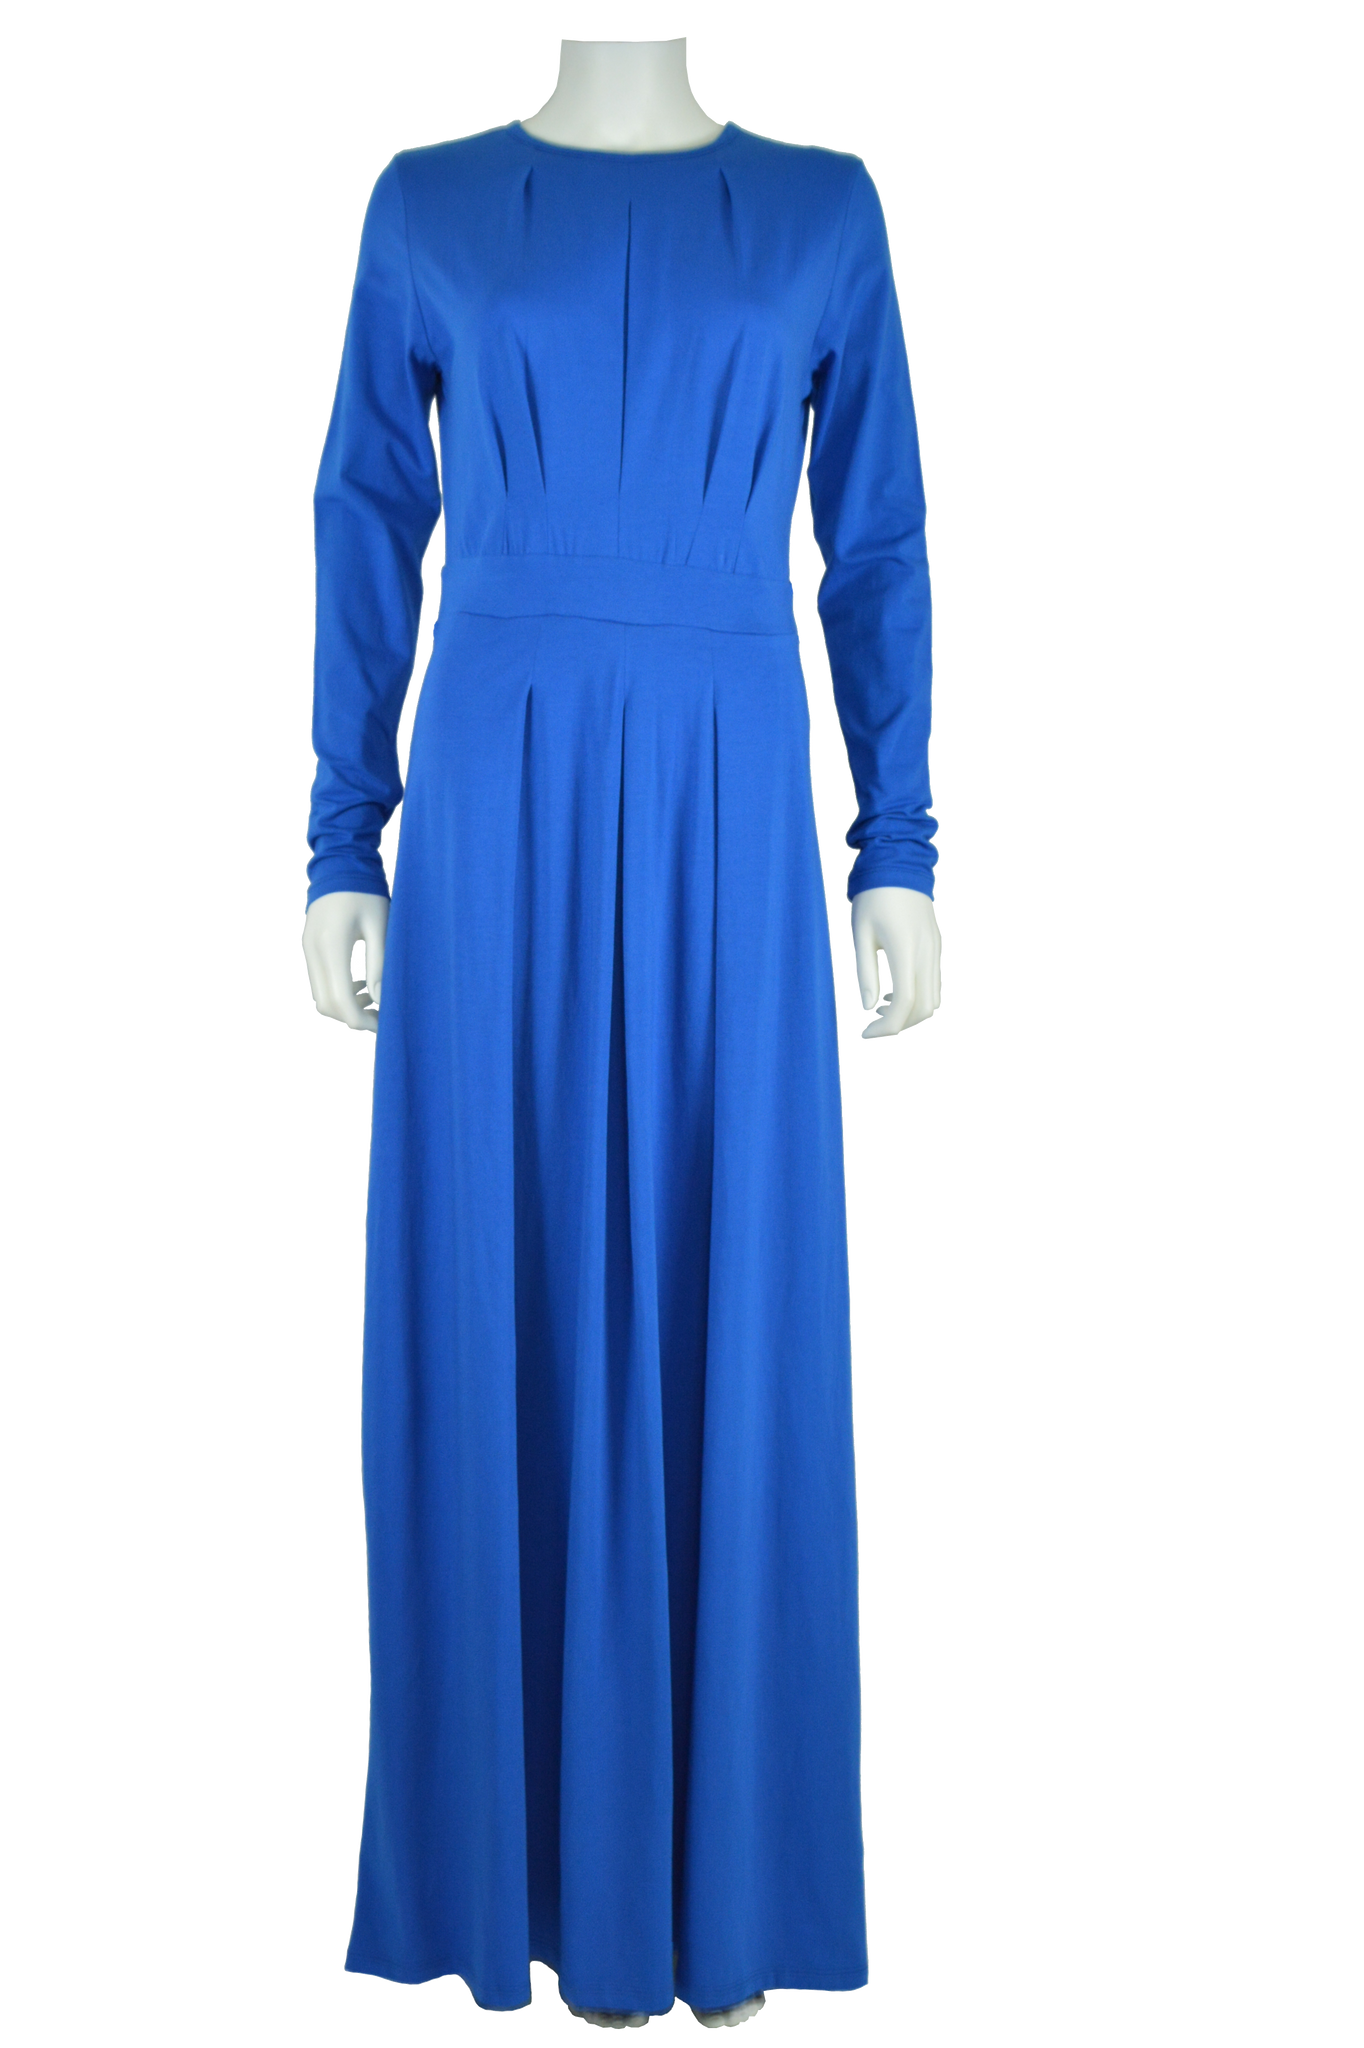 royal blue maxi dress, full length dress, maxi dress, cotton maxi dress, jersey maxi dress, long sleeve maxi dress